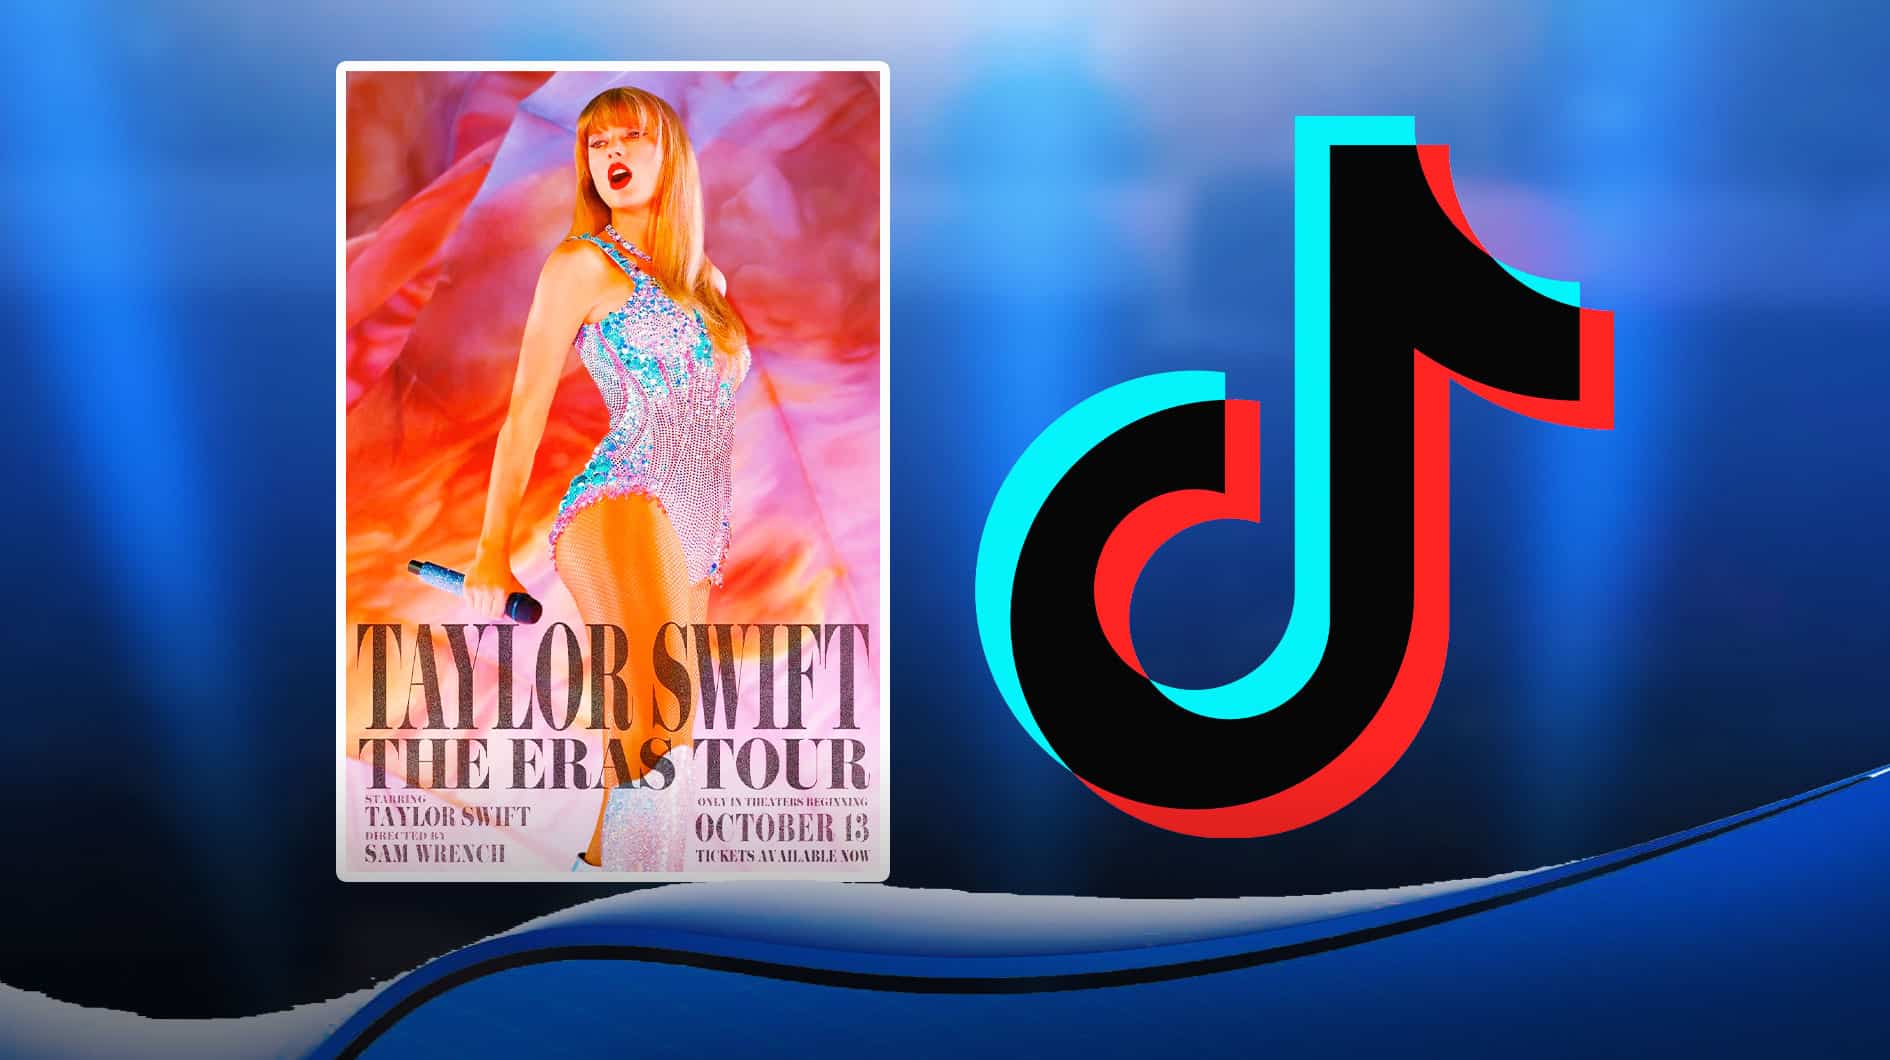 Taylor Swift’s “Eras” tour gets exclusive TikTok treatment